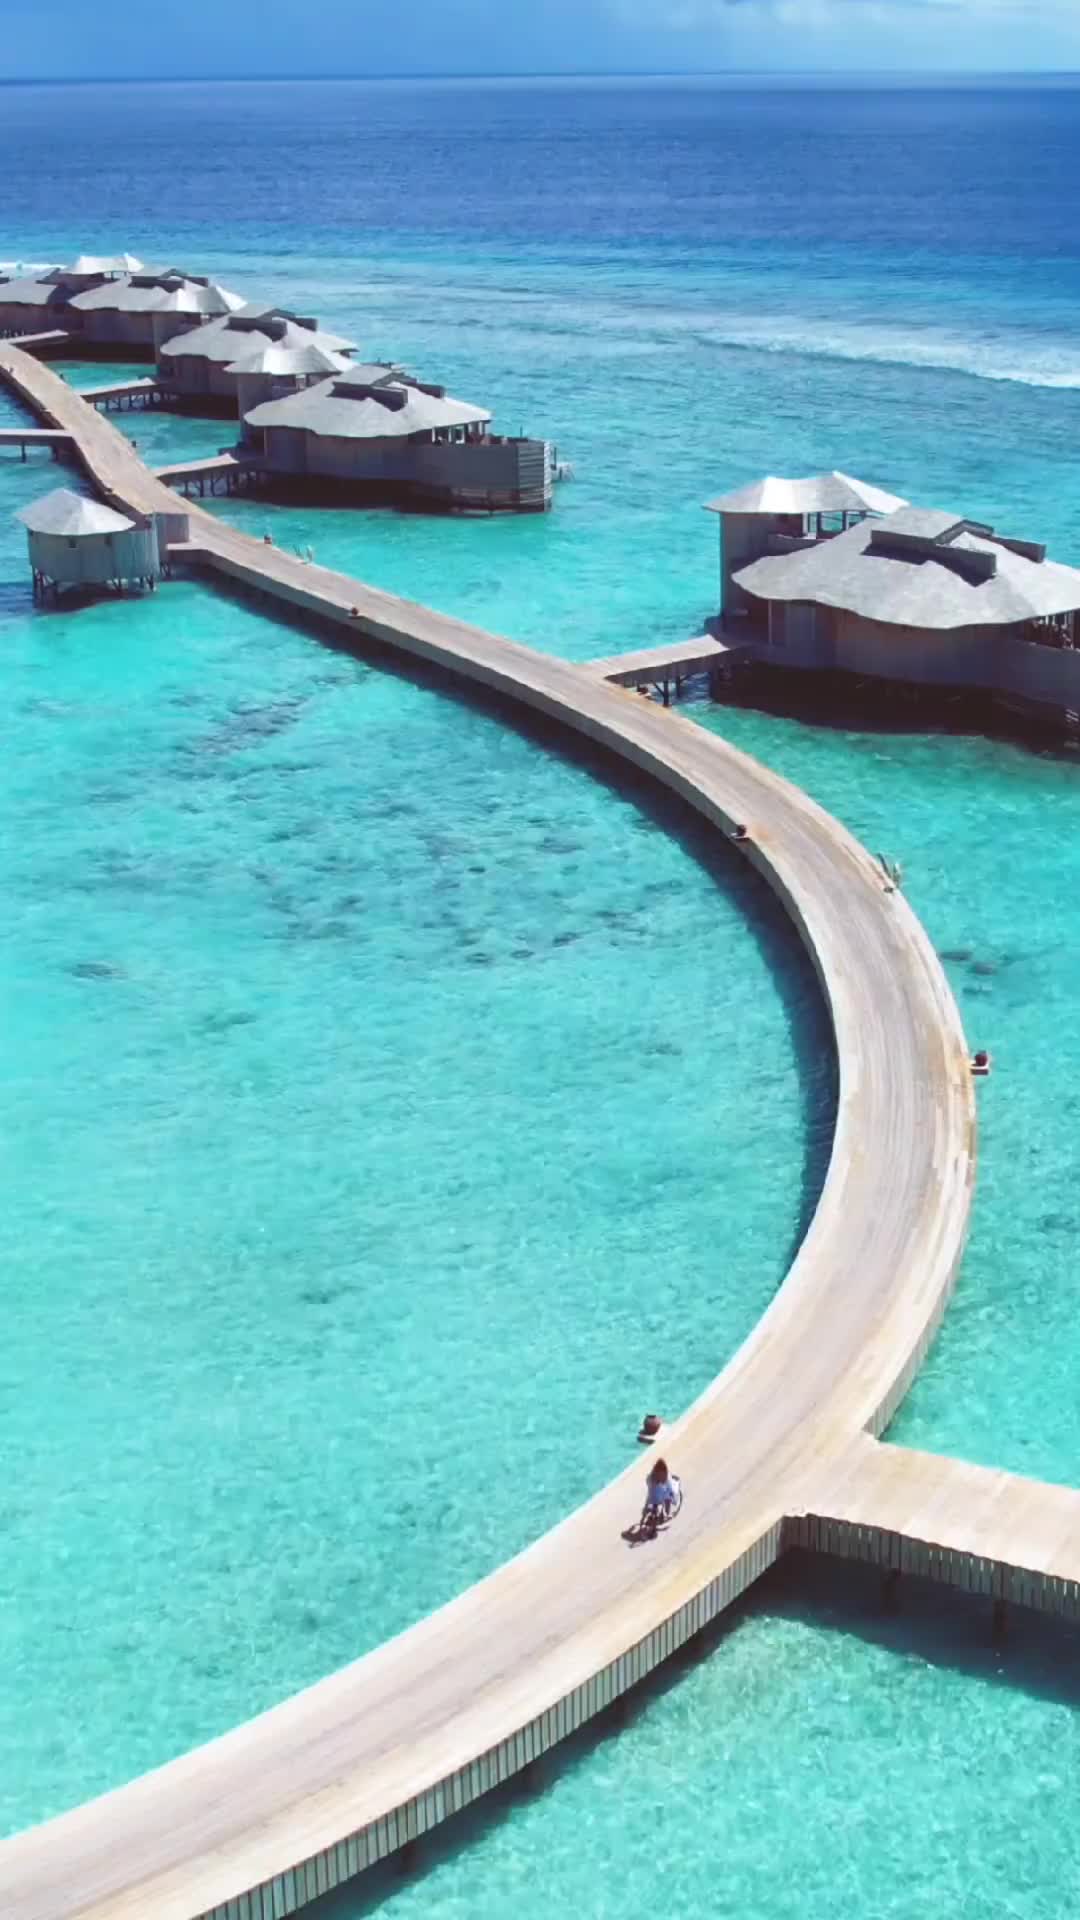 Paradise 🤩

-

Follow us ❤️ @toptravelplaces_ for more 👍
Follow us ❤️ @toptravelplaces_ for more 👍
Follow us ❤️ @toptravelplaces_ for more 👍

-

📸 Video taken by @toptravelplaces_

-

#maldives #maldivesresorts #maldivesislands #sonevafushi #sonevajani #discoversoneva #maldivesinsider #visitmaldives #maldiveslovers #Мальдивы #путешествия #maldivesparadise #maldivesphotography #amazingdestinations #instatravel #paradise #beautifulmaldives #beachtime #videooftheday #greece #bali #thailand #borabora #viralvideos